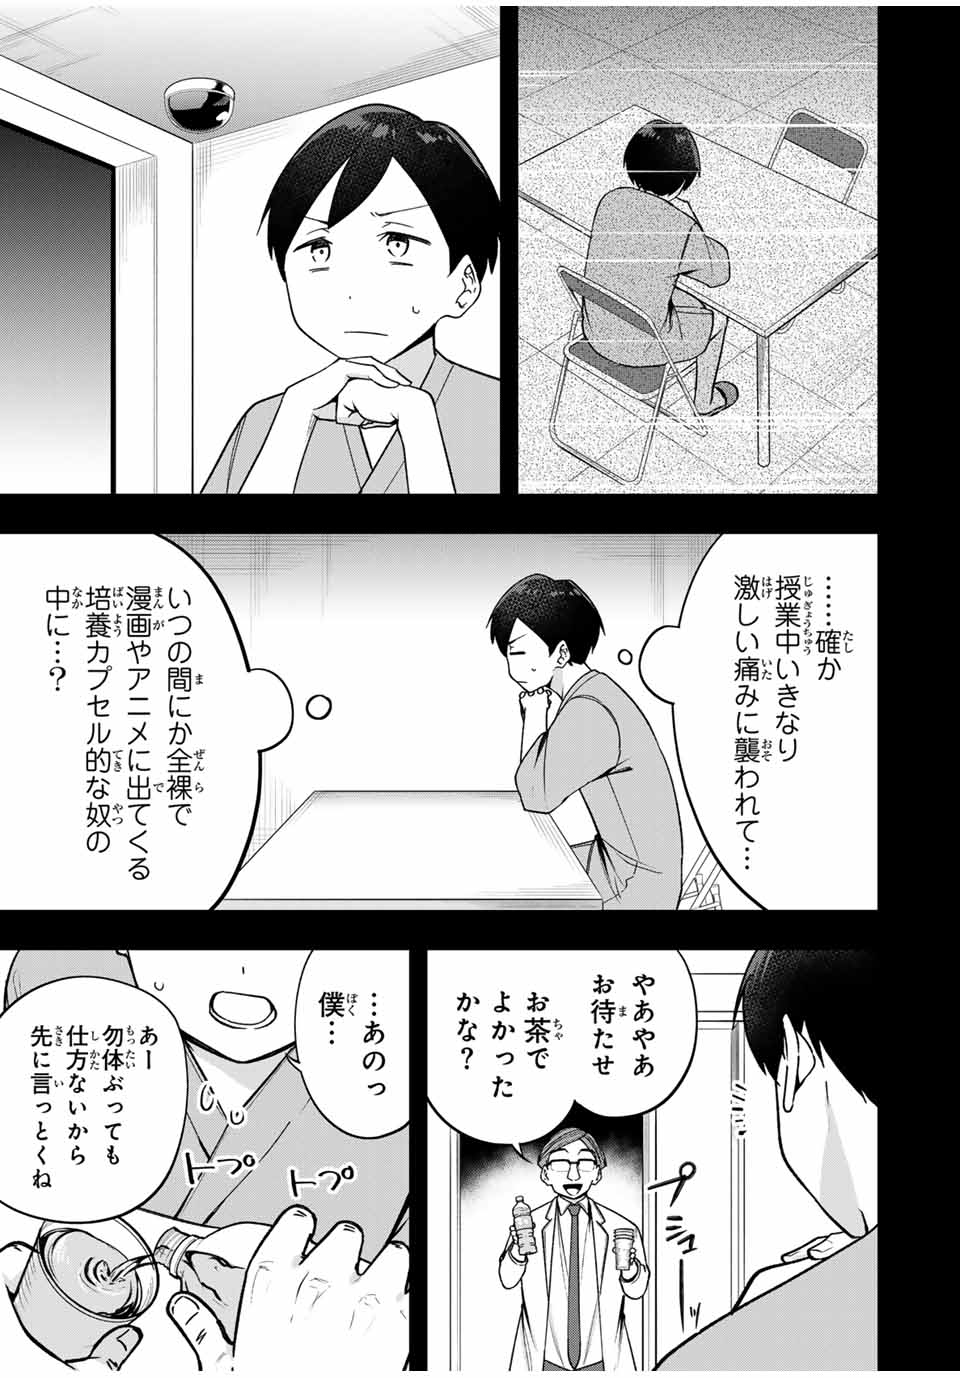 Heroine wa xx Okasegitai - Chapter 9 - Page 11